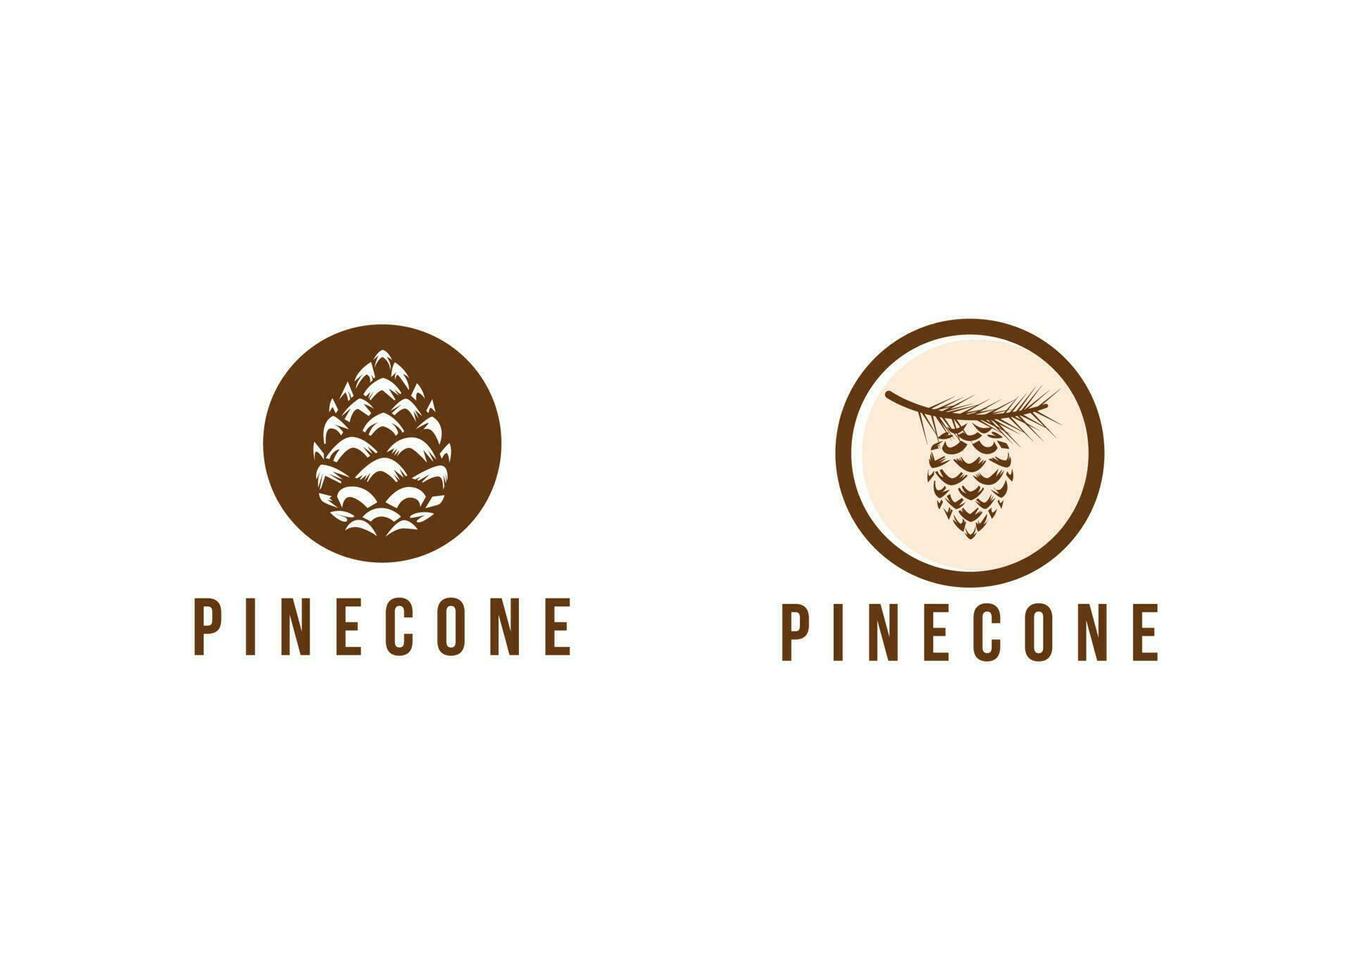 Minimalist pinecone logo vector. Pine tree logo vector